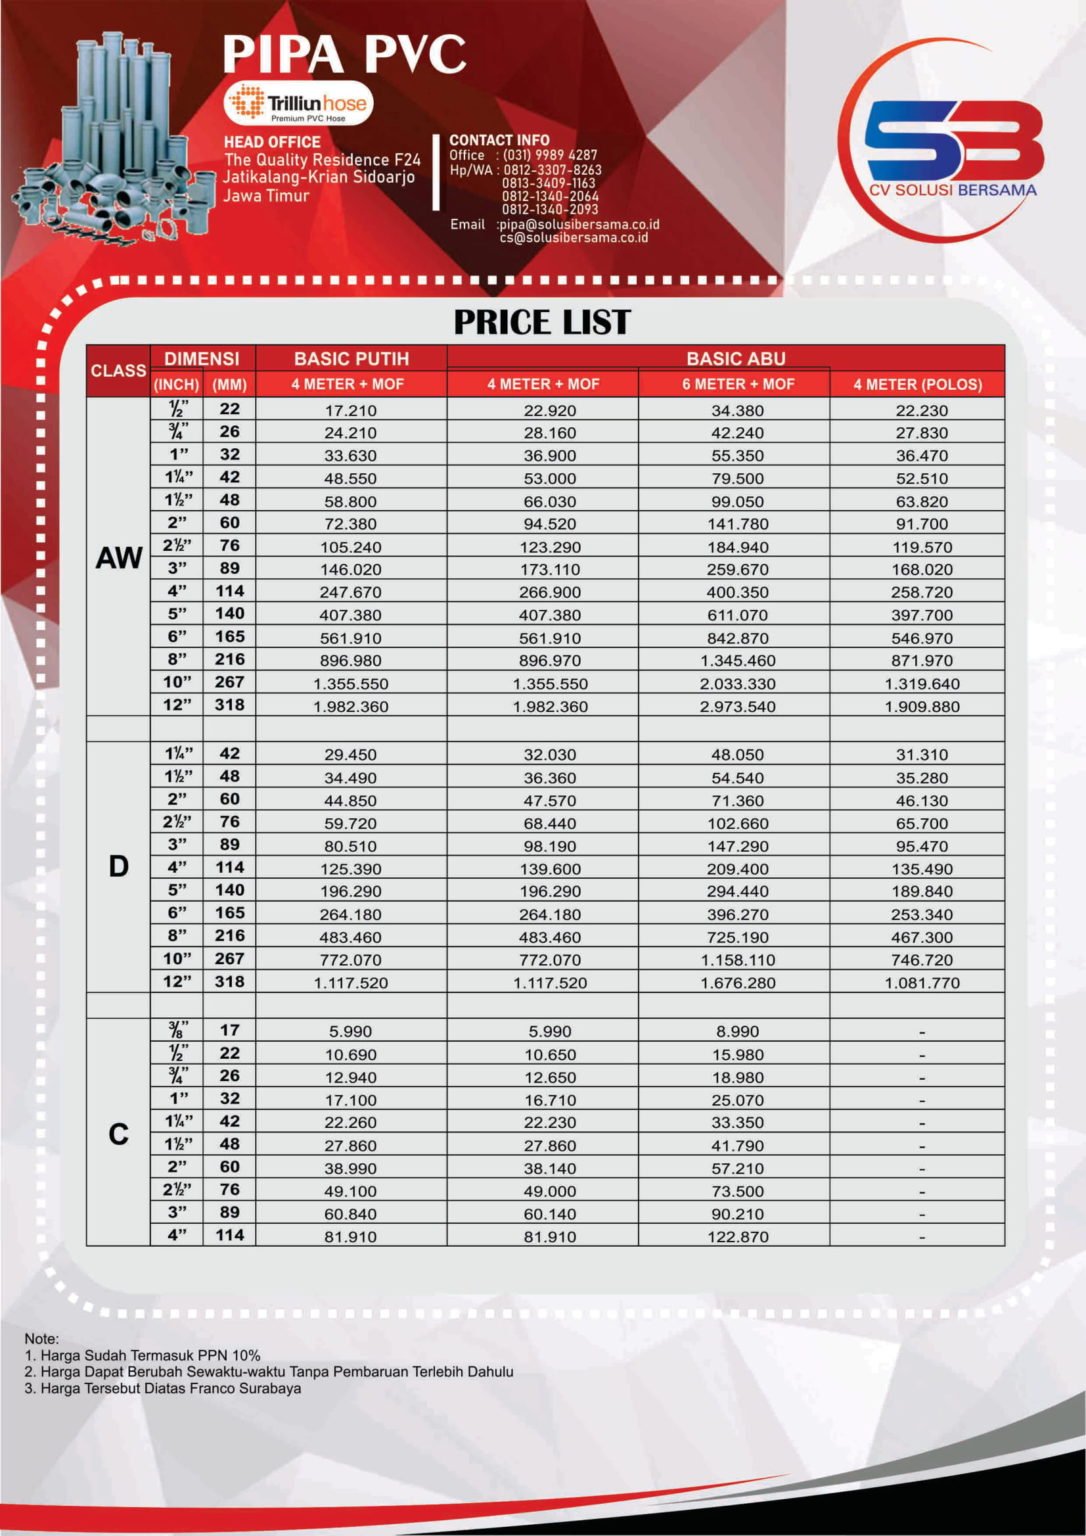 Price-List-Pipa-PVC-Trilliun - CV SOLUSI BERSAMA